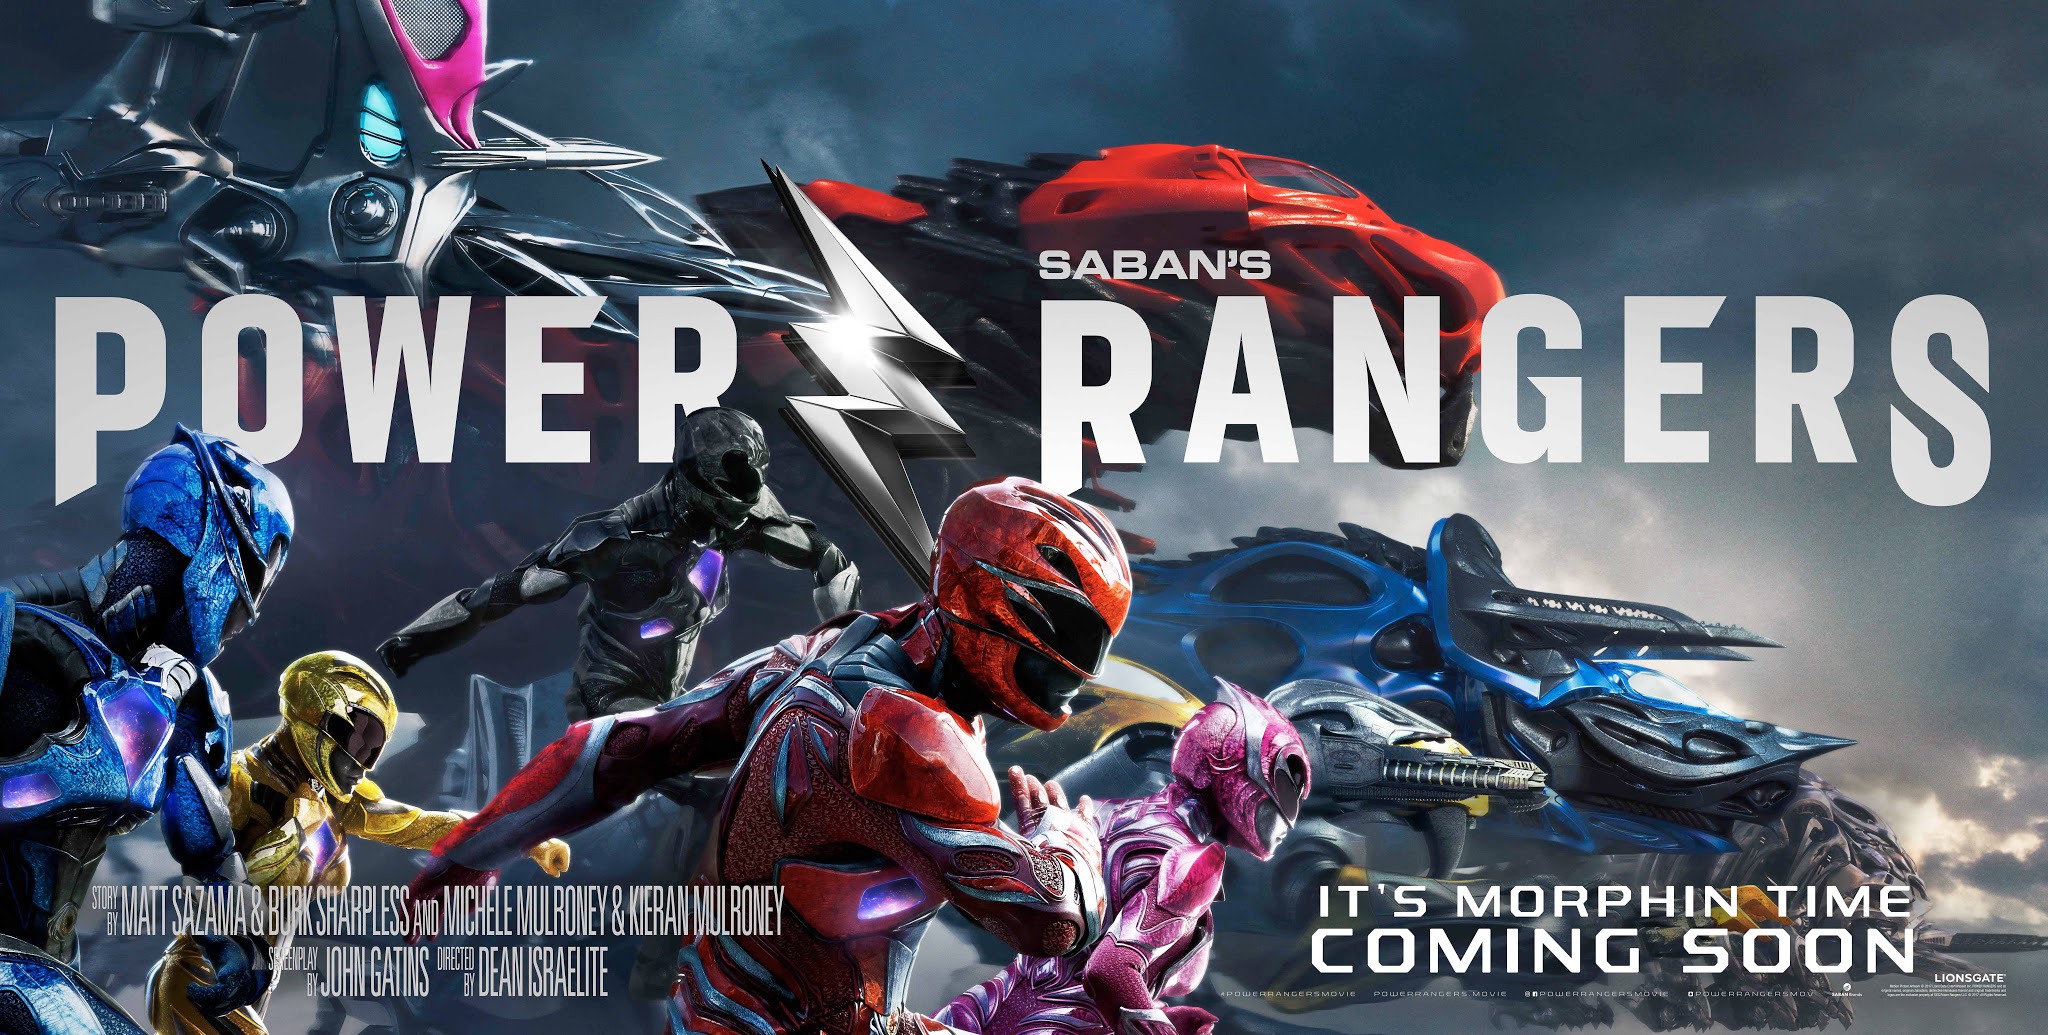 Mega Sized Movie Poster Image for Power Rangers (#25 of 50)